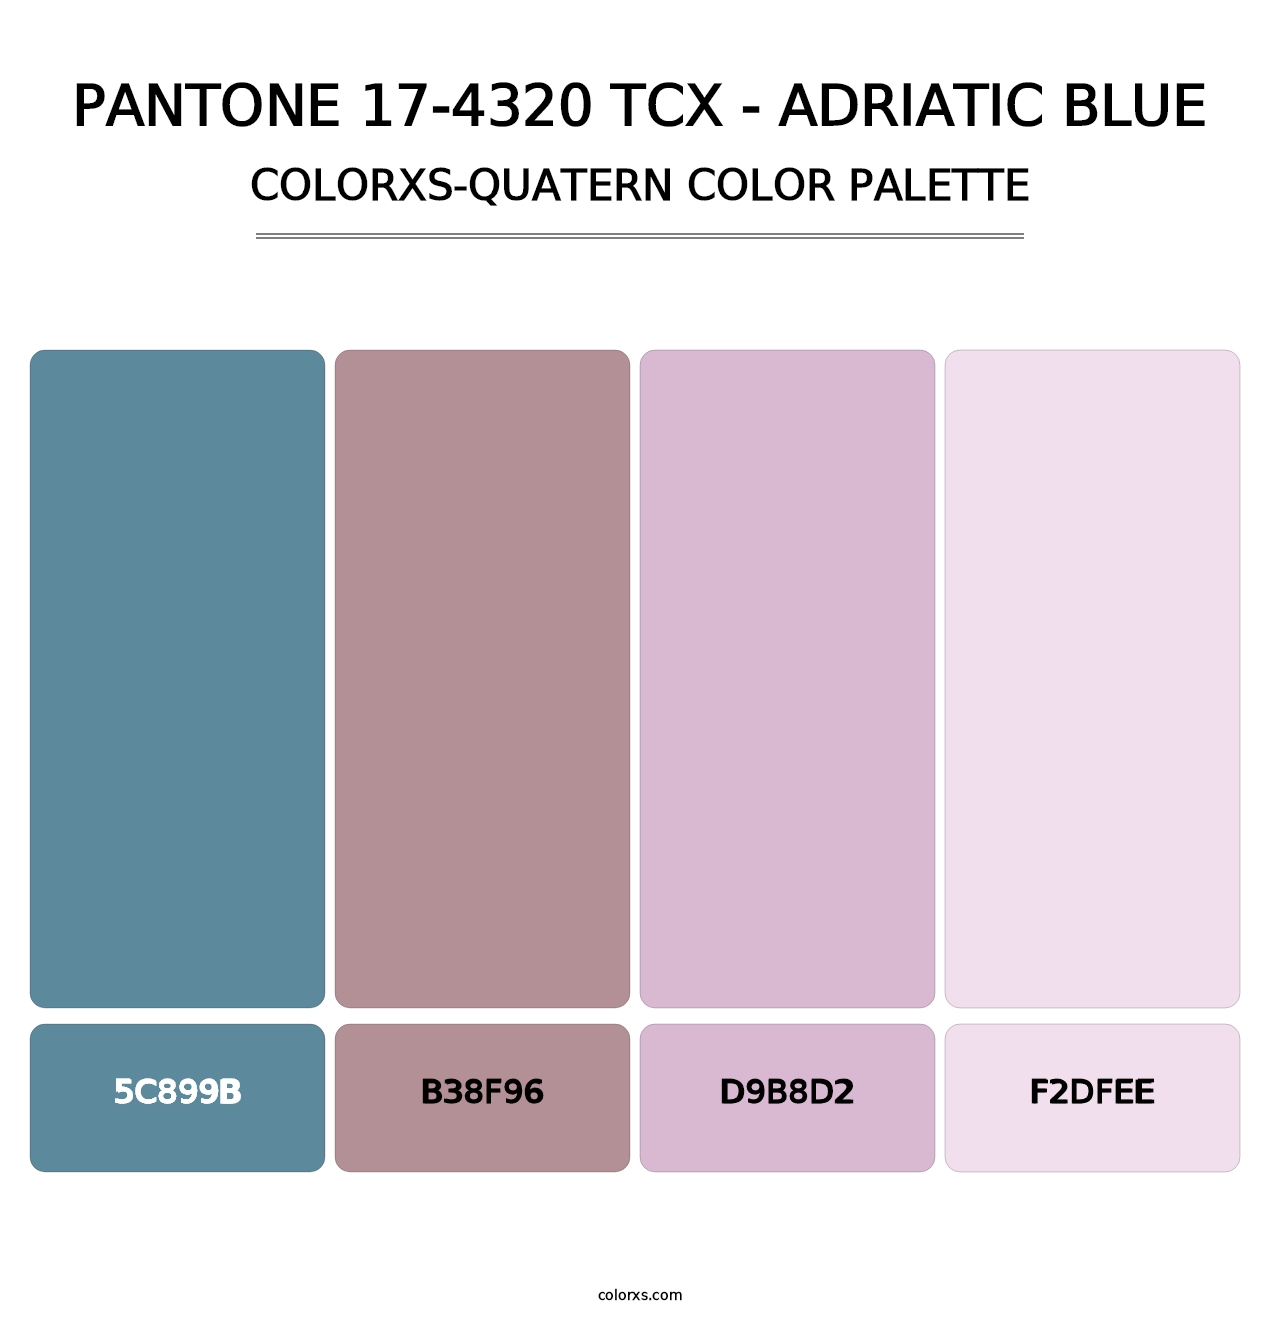 PANTONE 17-4320 TCX - Adriatic Blue - Colorxs Quatern Palette